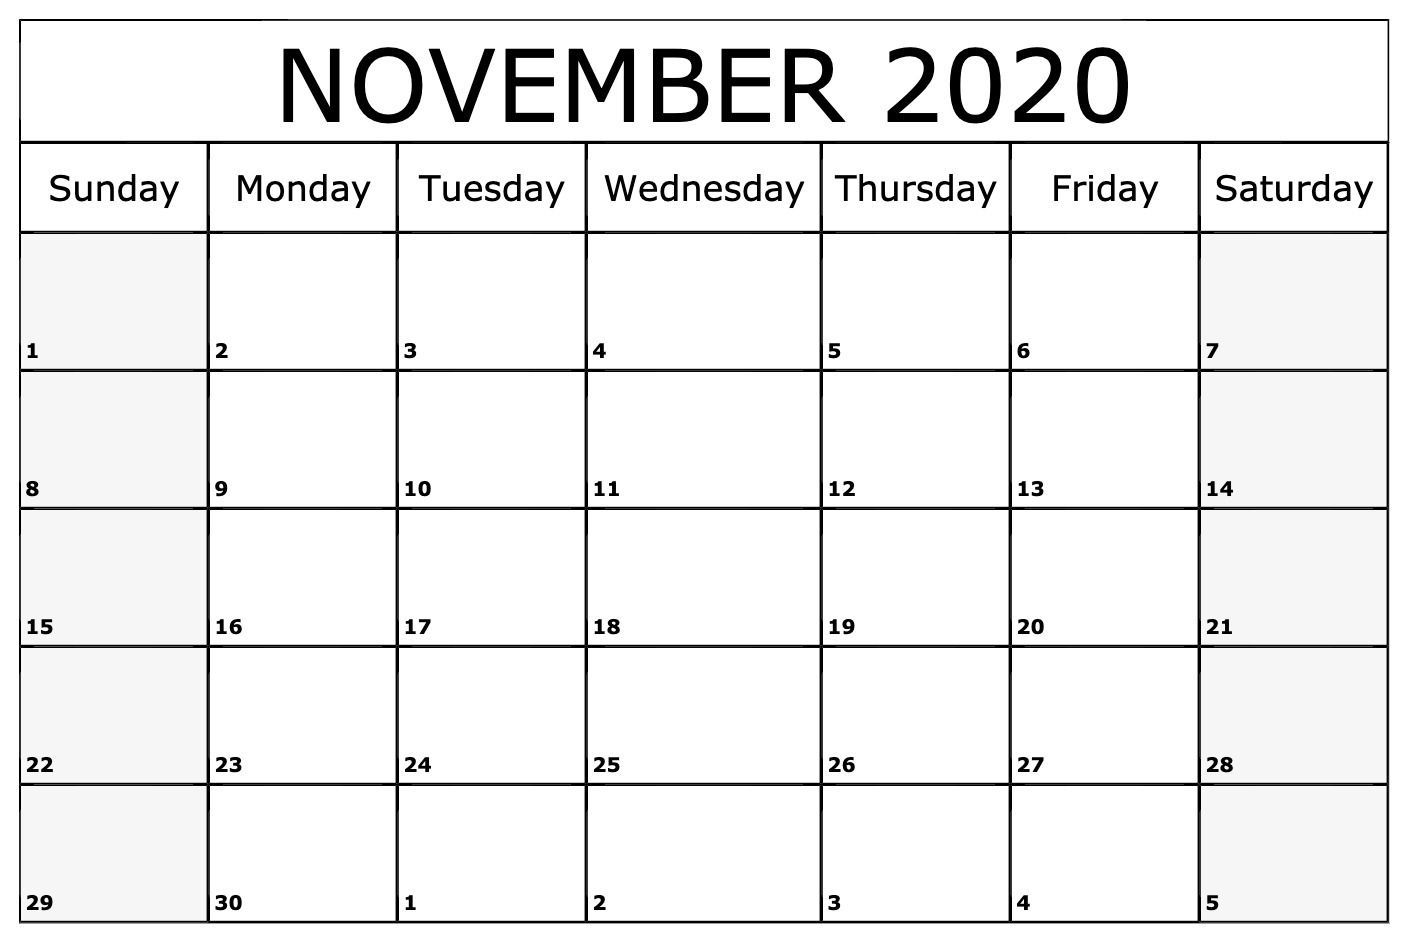 November 2020 Calendar Wallpapers   Top Free November 2020